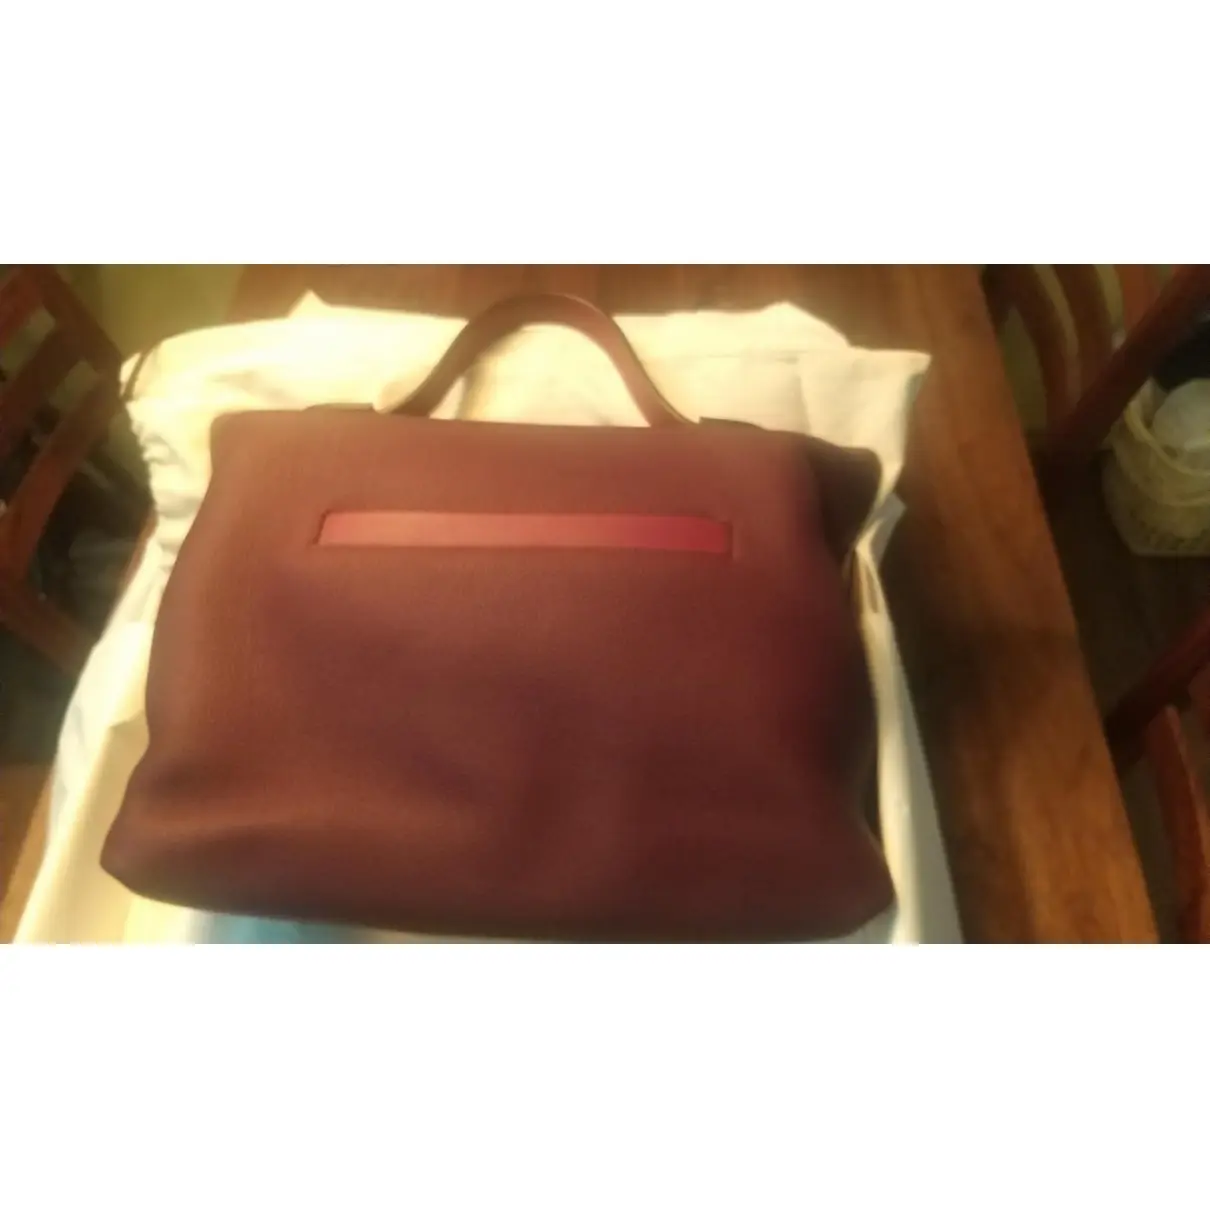 24/24 leather handbag Hermès